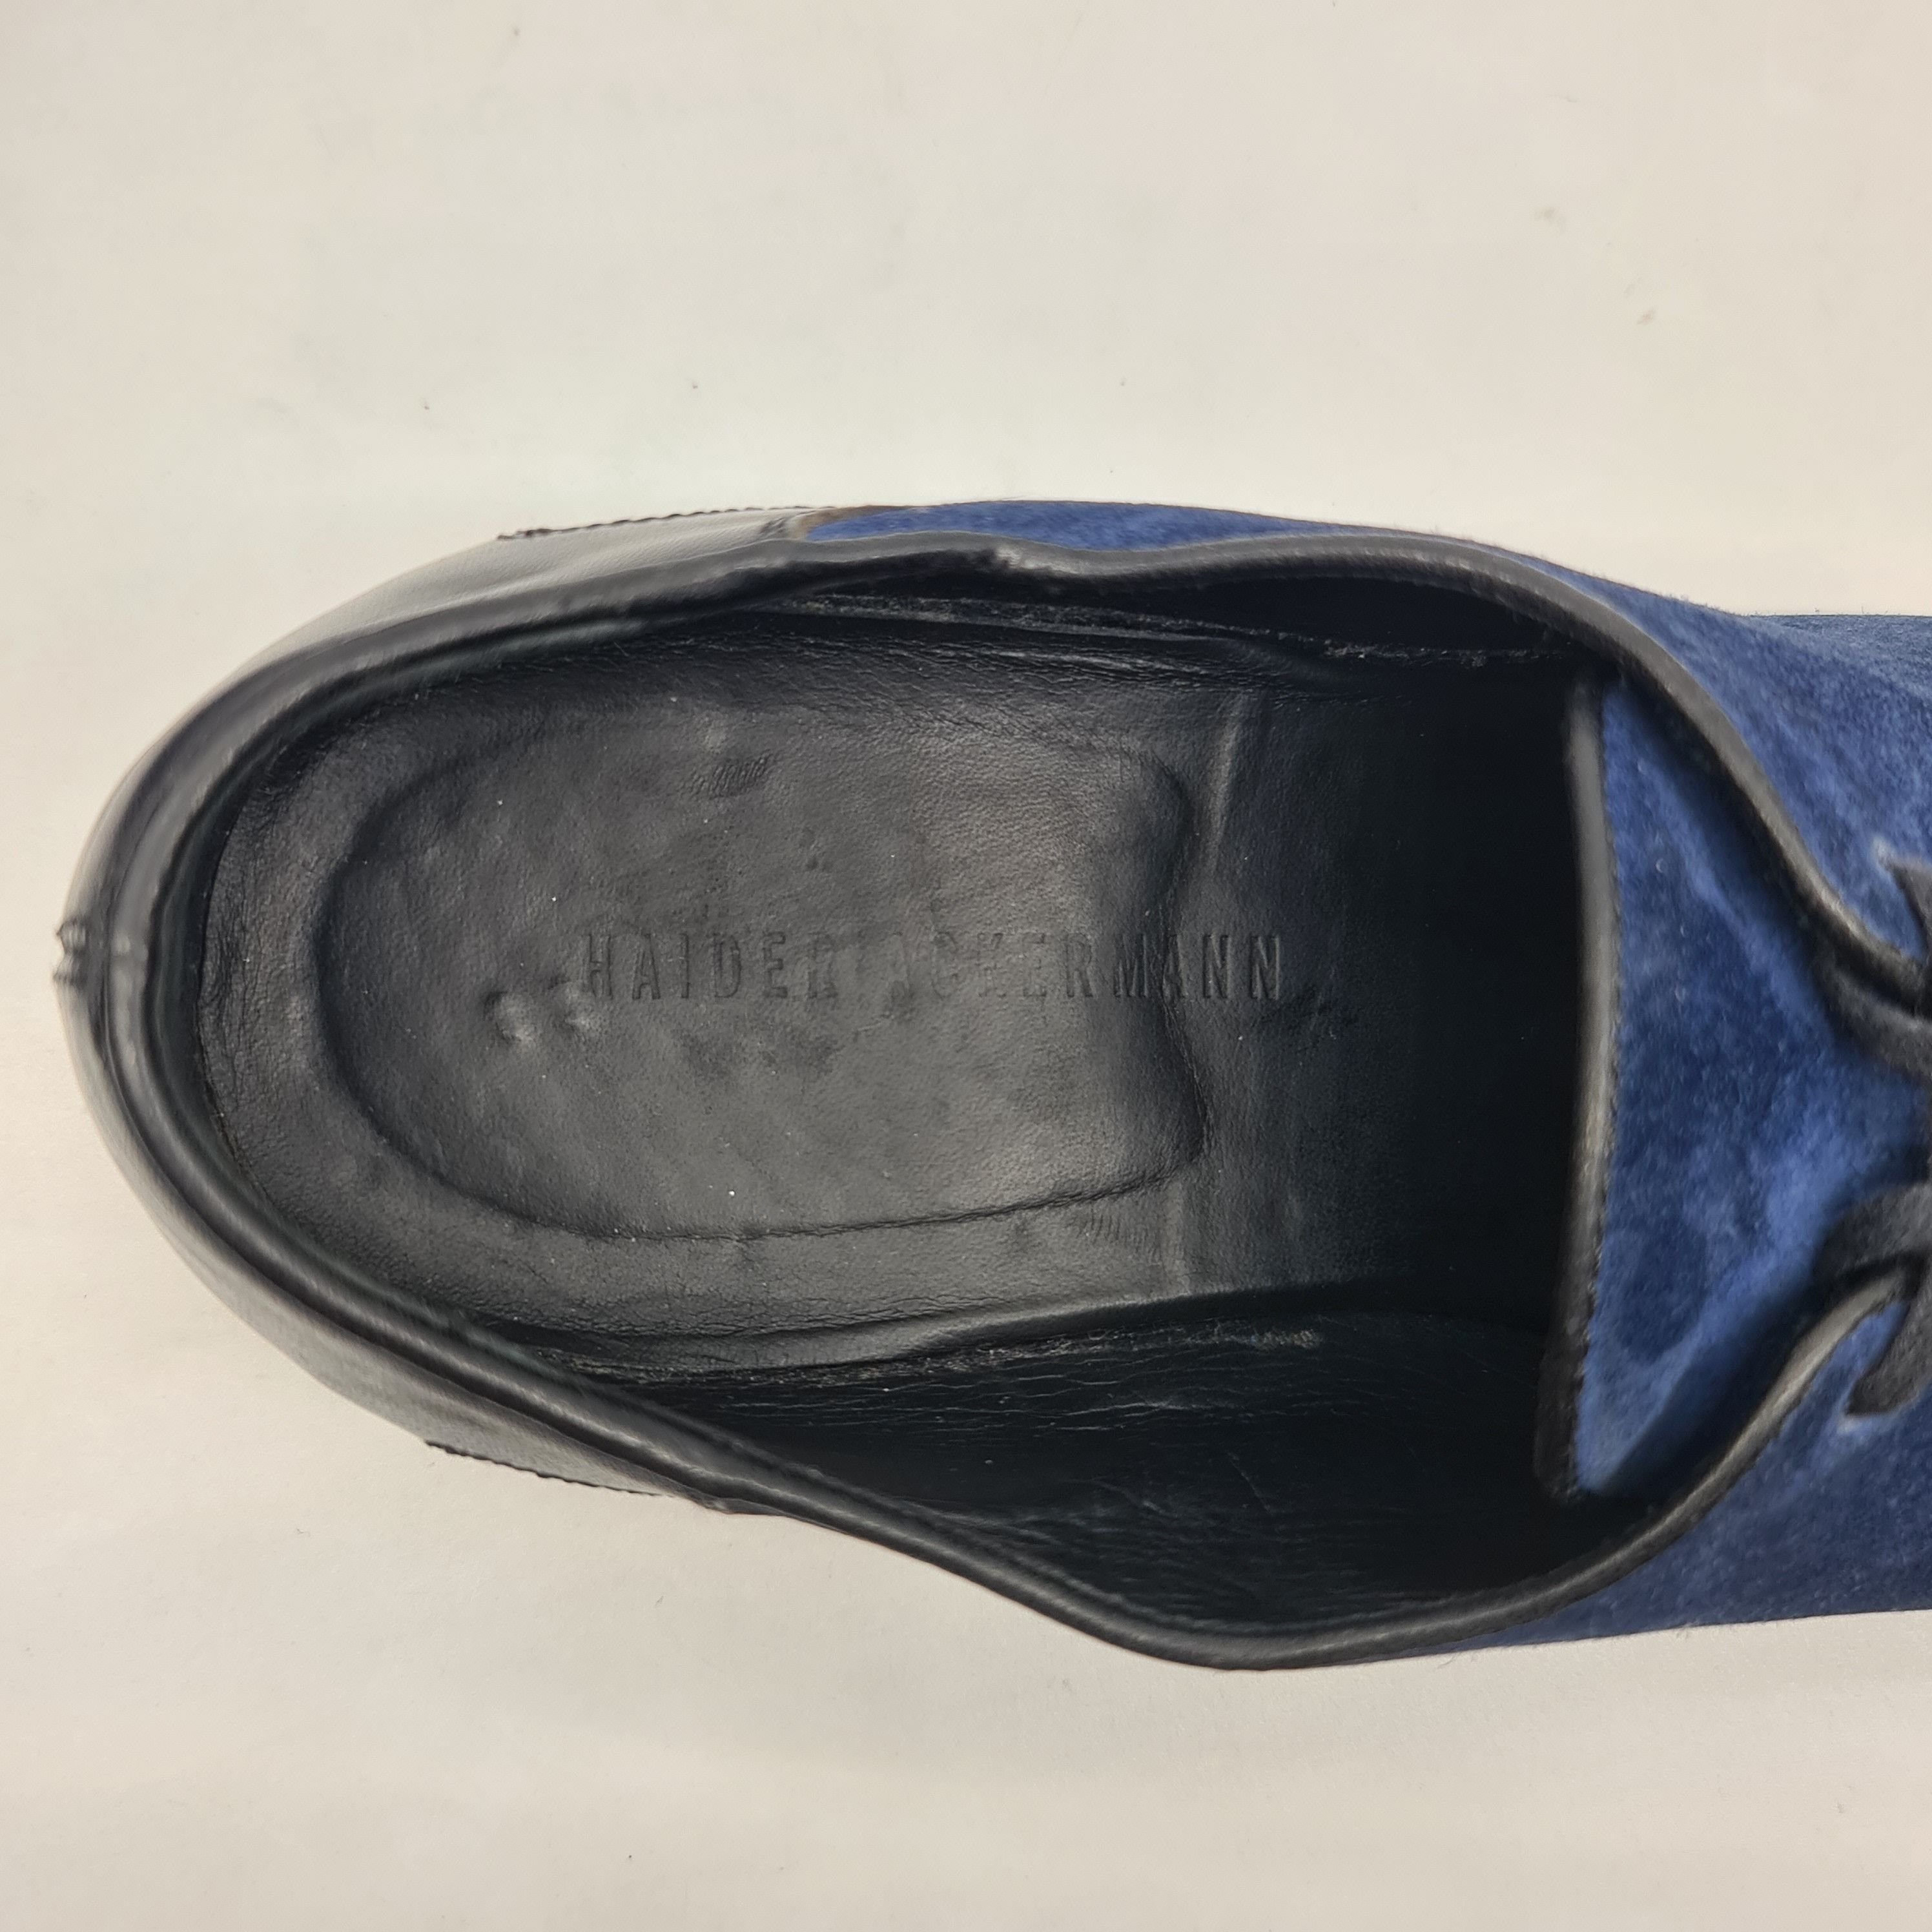 Haider Ackermann - SS16 Runway Blue Suede Oxford Shoes - 9